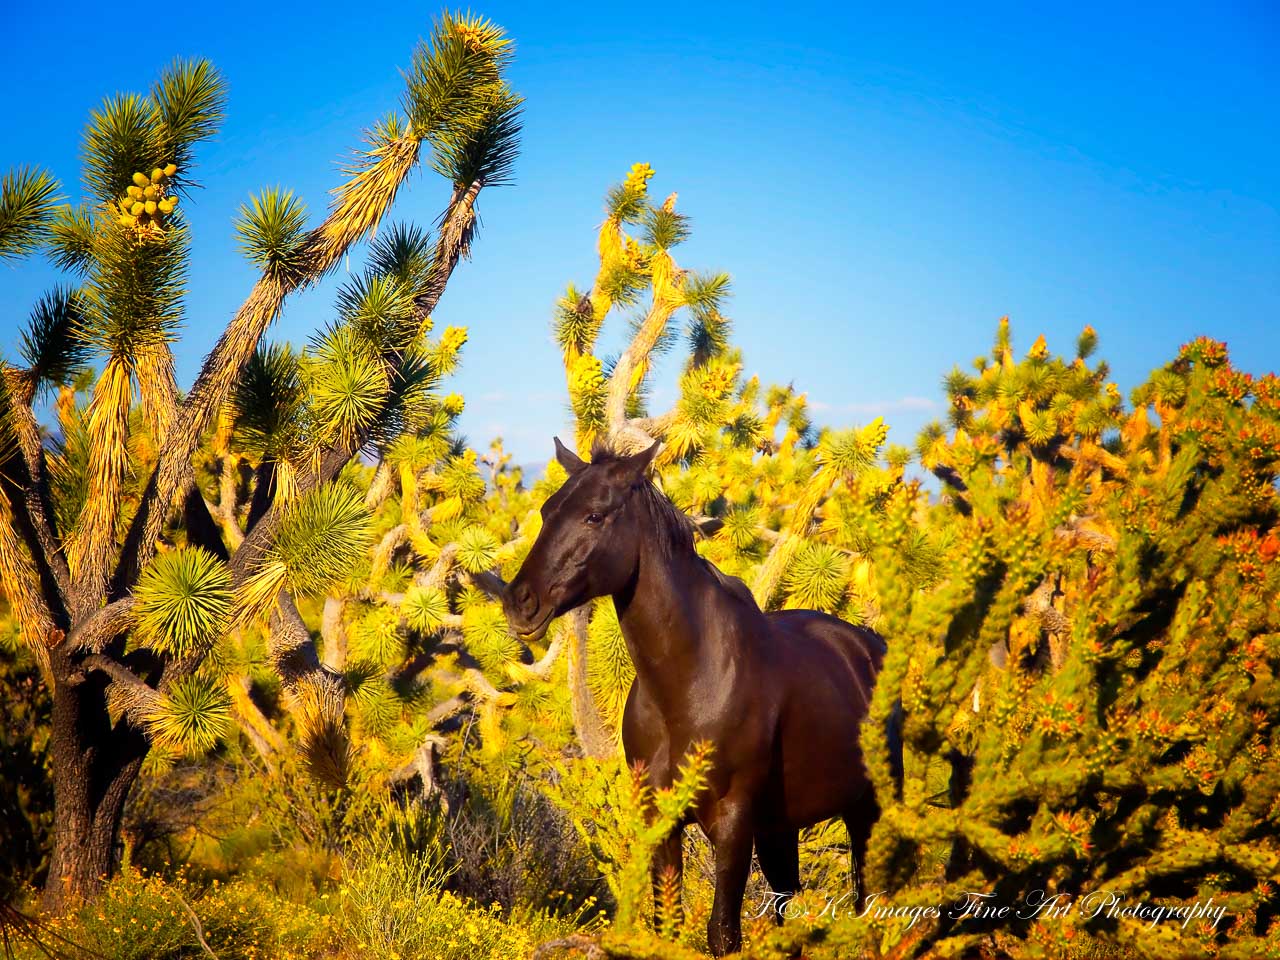 https://imagesbytk.com/black-Horse-in-joshua-trees-arizona/